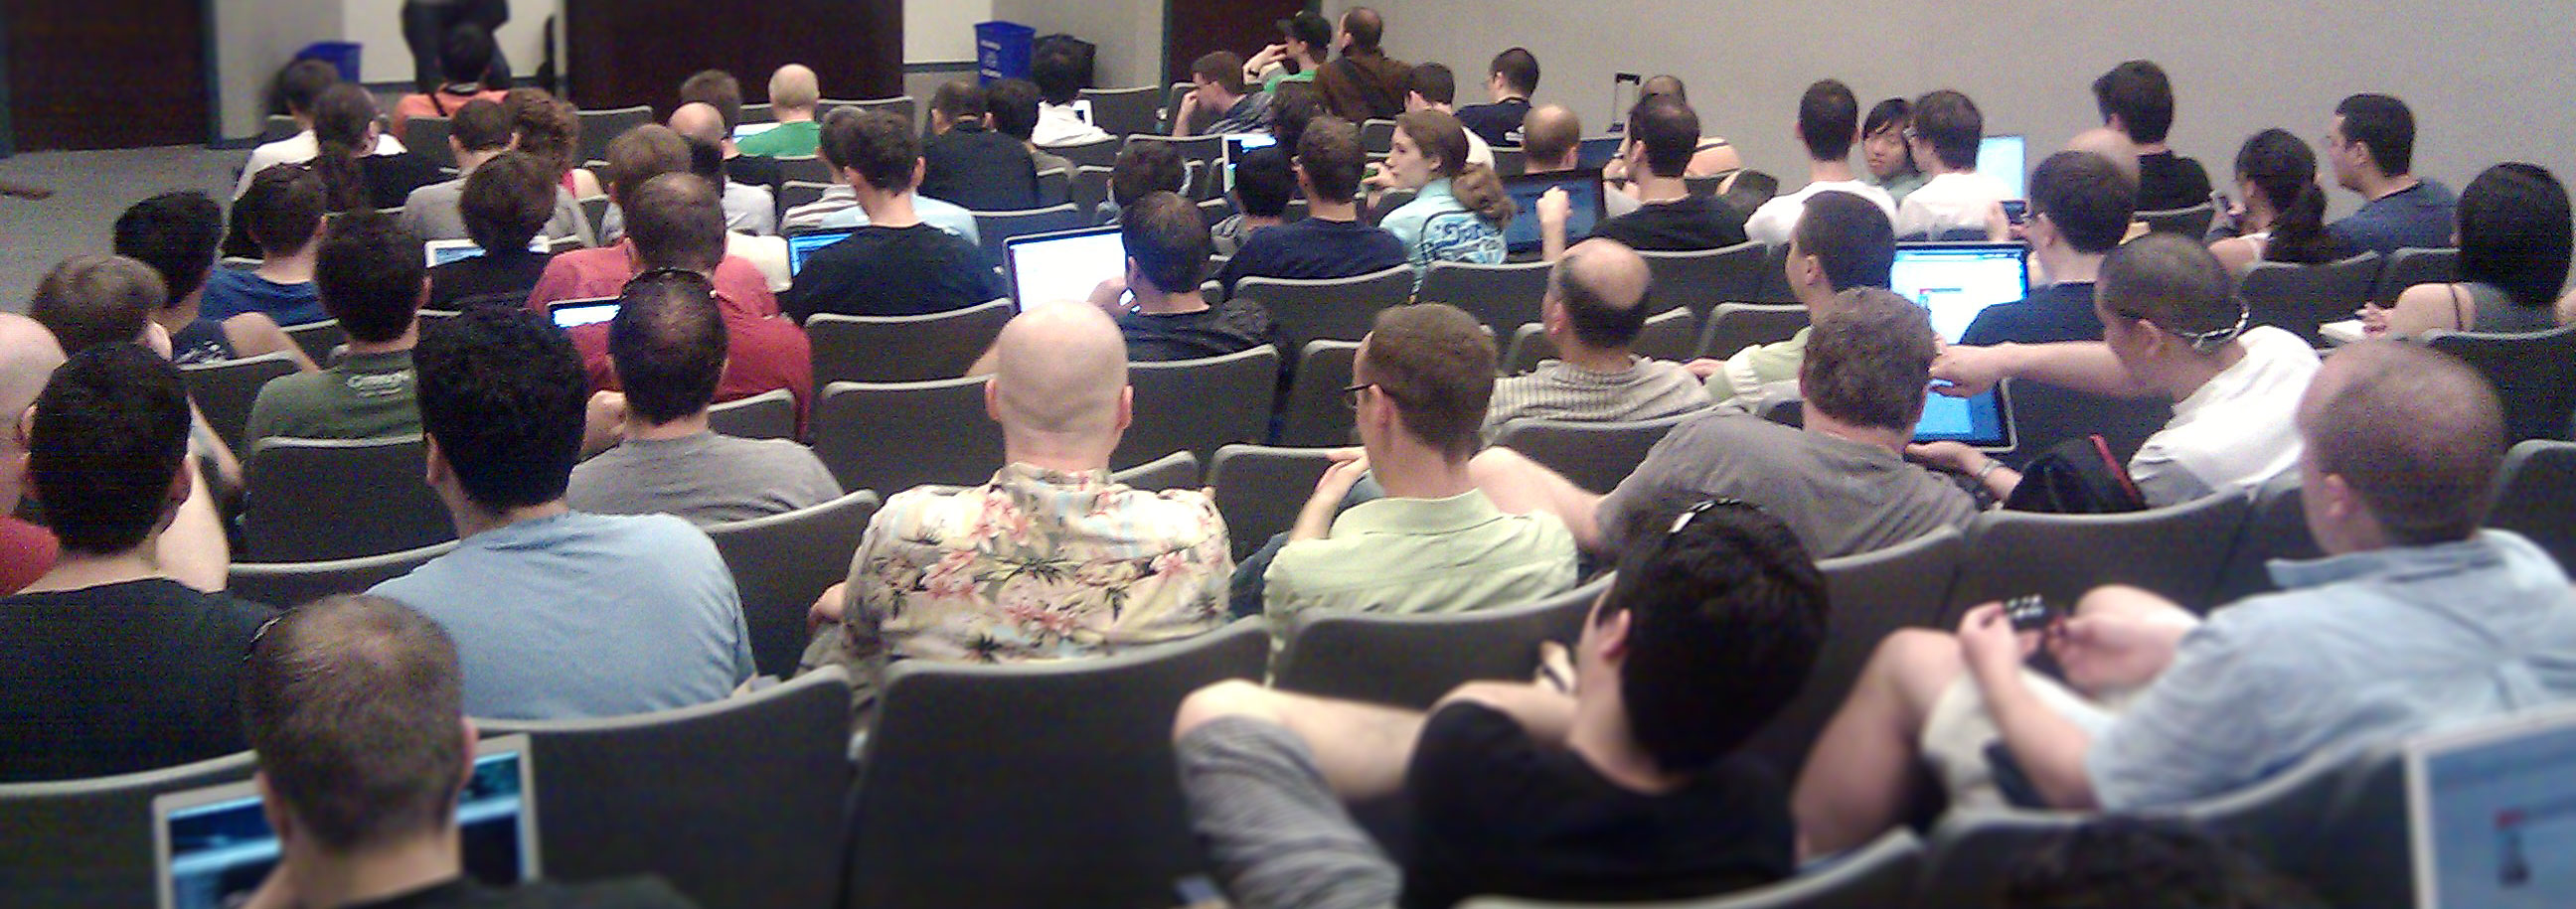 Group of developers attending a VanJS event